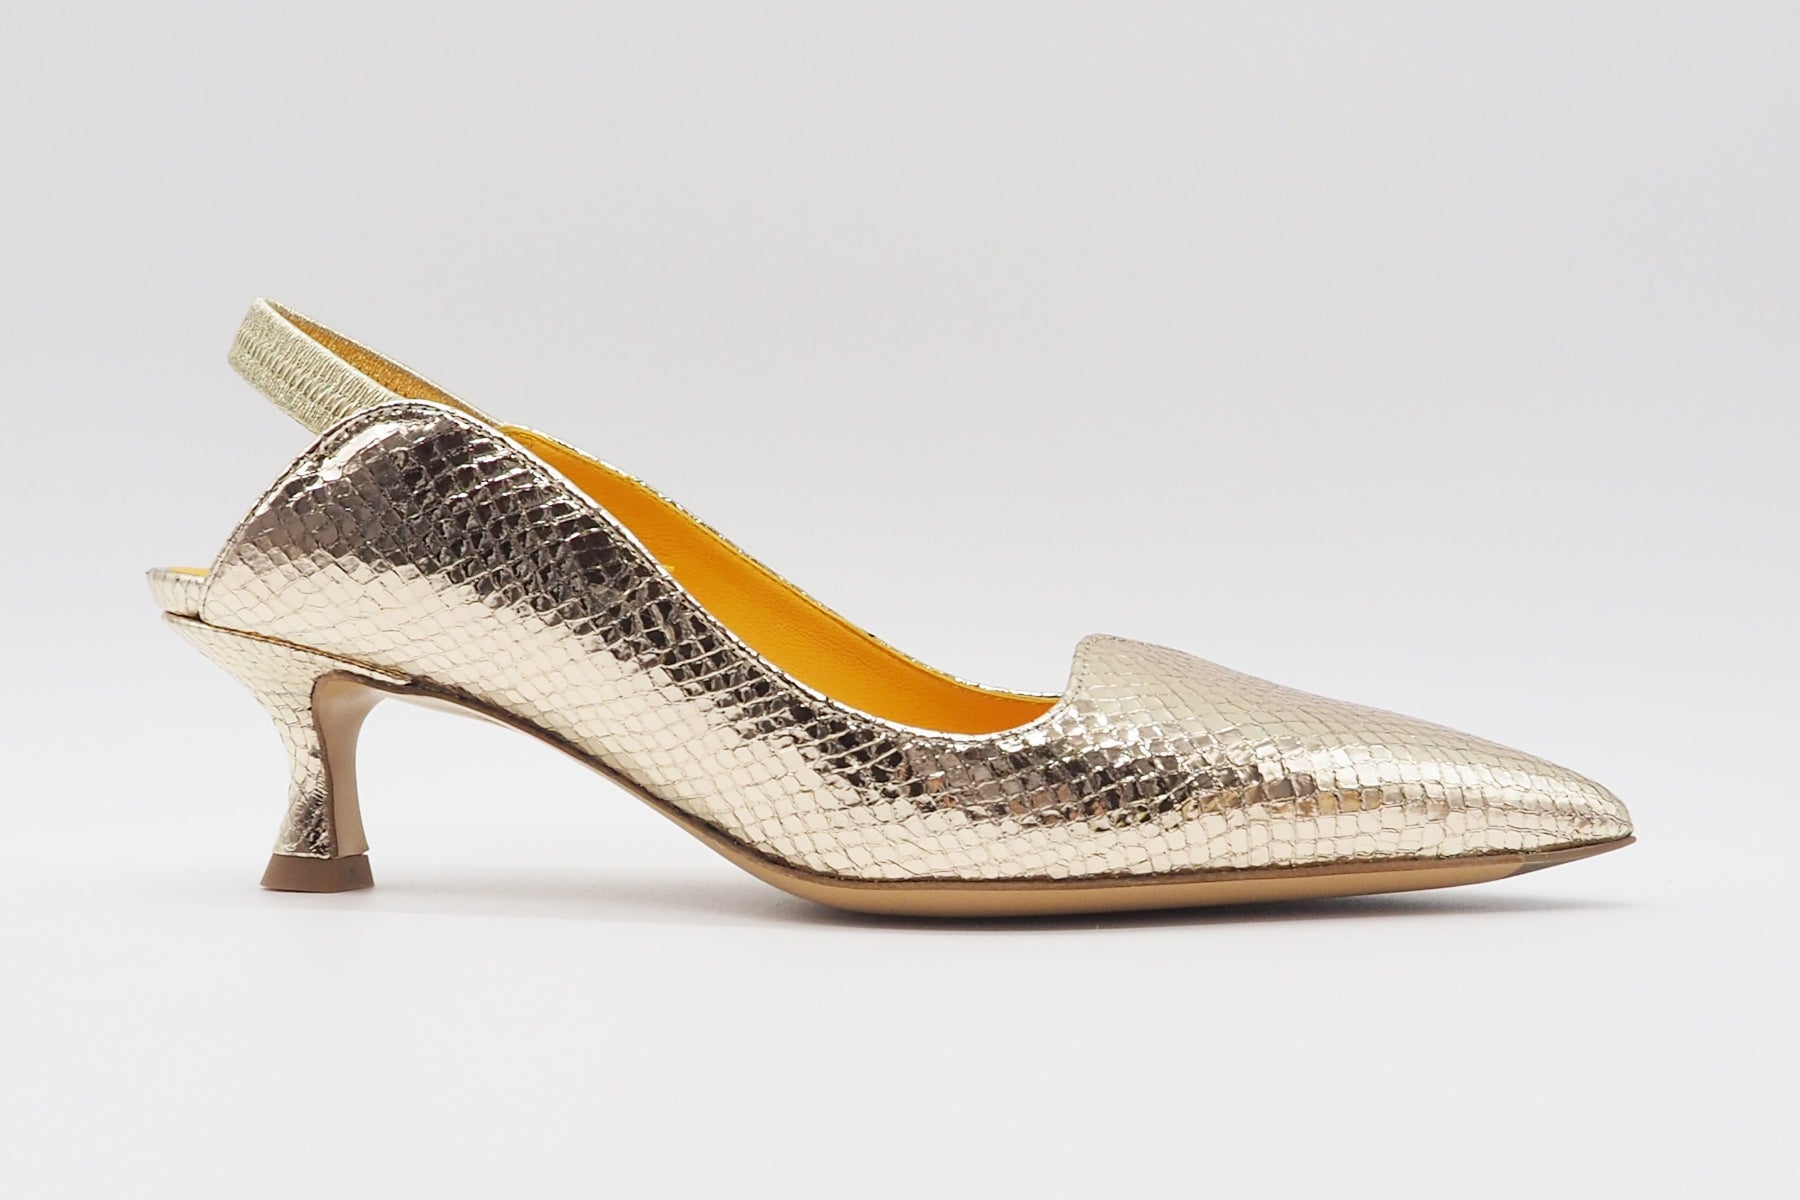 Edle Damen Slings aus Metallicleder in Gold - Absatz 5cm - Naomi Damen Pumps & Slings Mara Bini 